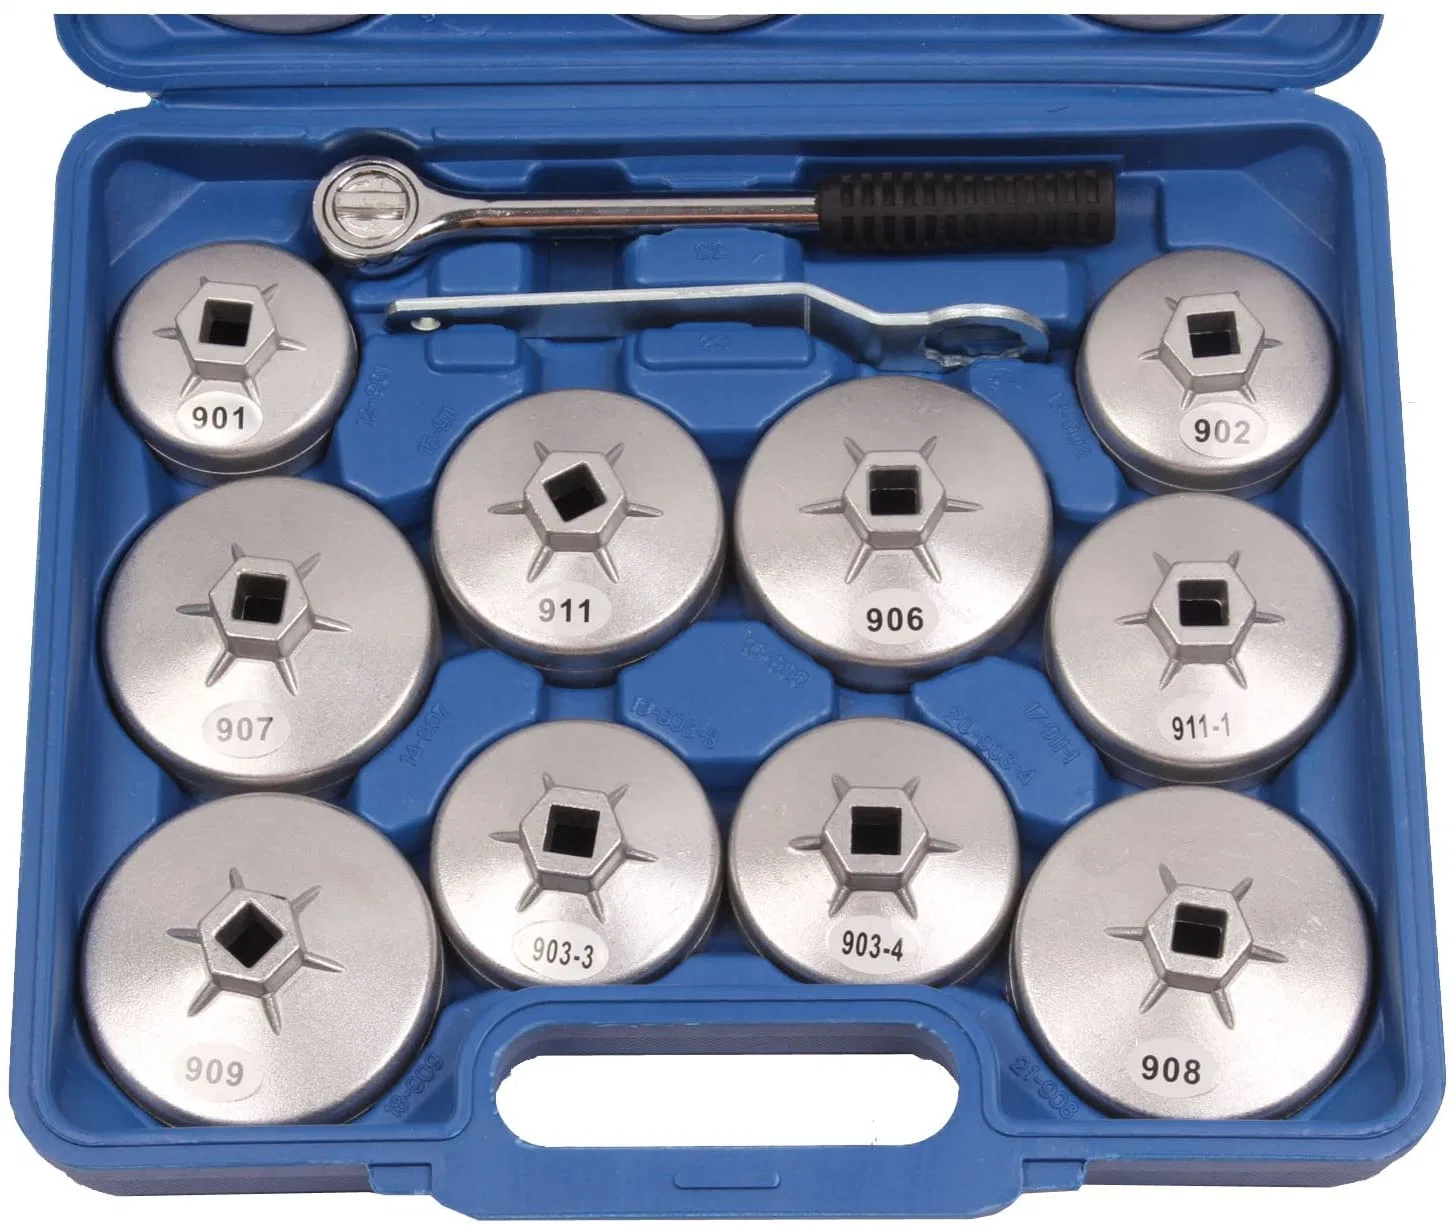 23PCS Bowl Type Oil Filter Wrench Set, 23PCS Bowl Type Oil Filter Wrench Set with 1/2" Dr. Ratchet Handle Universal Spanner, Car Service Tools Sets (48032310)